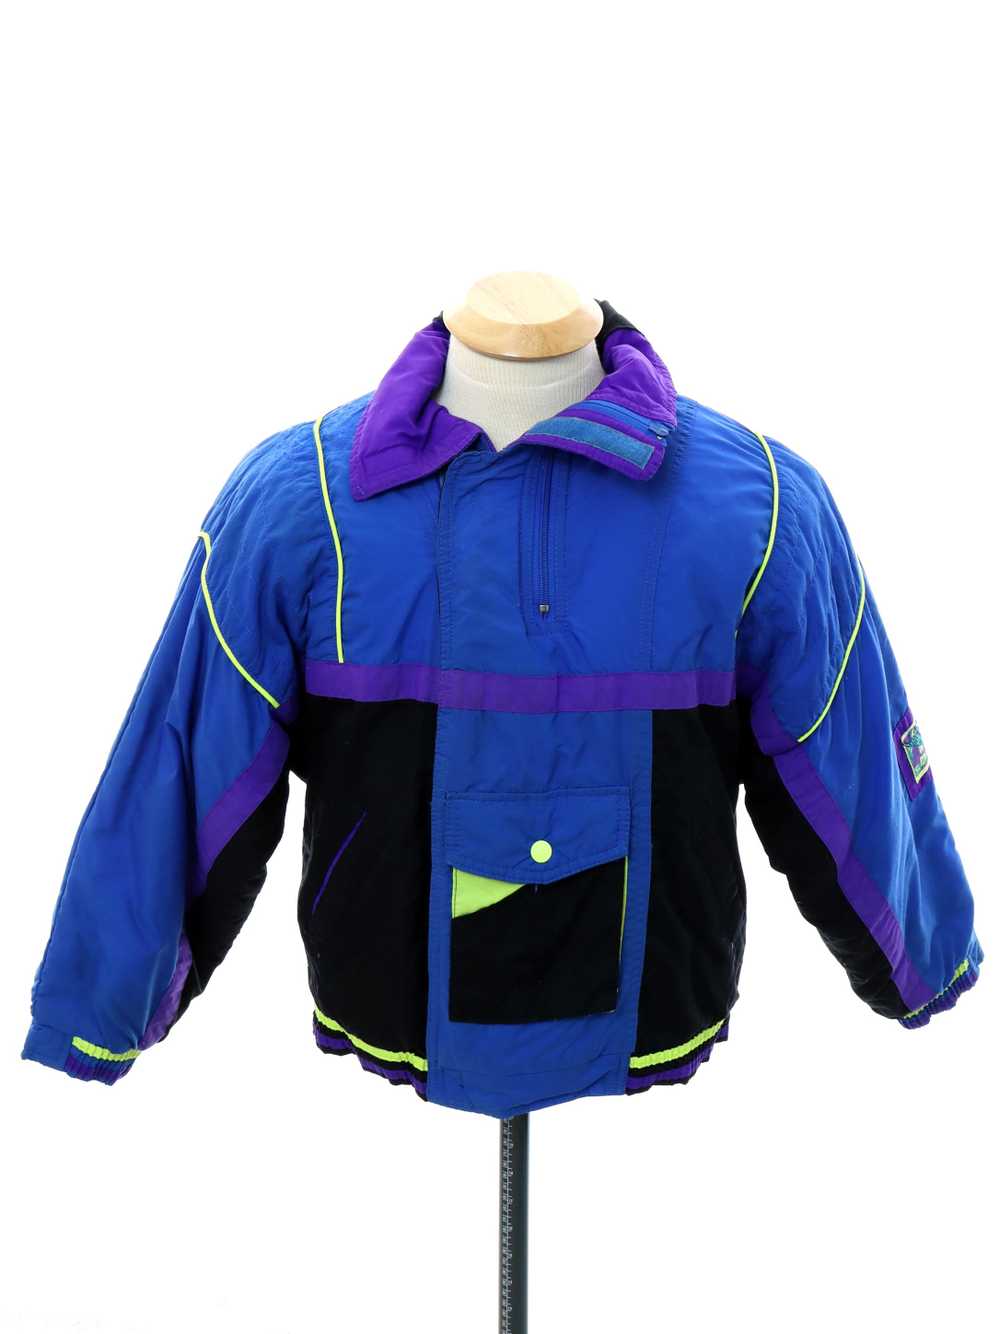 1990's Unisex Ladies or Boys Ski Jacket - image 1